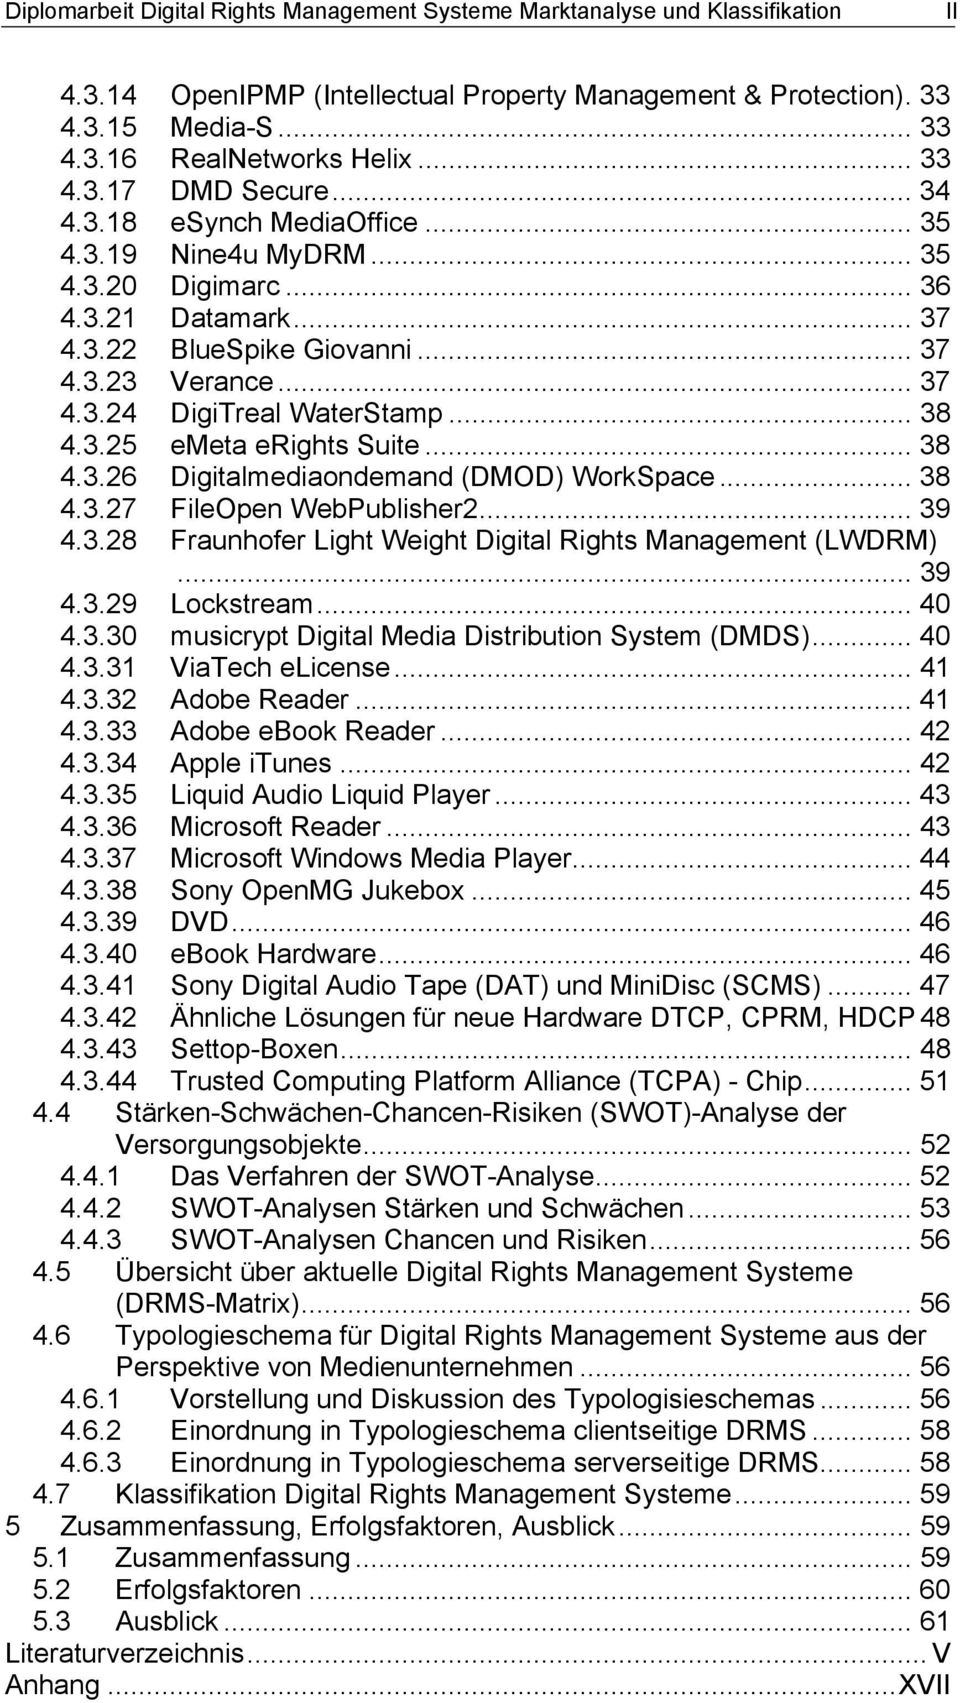 .. 38 4.3.25 emeta erights Suite... 38 4.3.26 Digitalmediaondemand (DMOD) WorkSpace... 38 4.3.27 FileOpen WebPublisher2... 39 4.3.28 Fraunhofer Light Weight Digital Rights Management (LWDRM)... 39 4.3.29 Lockstream.